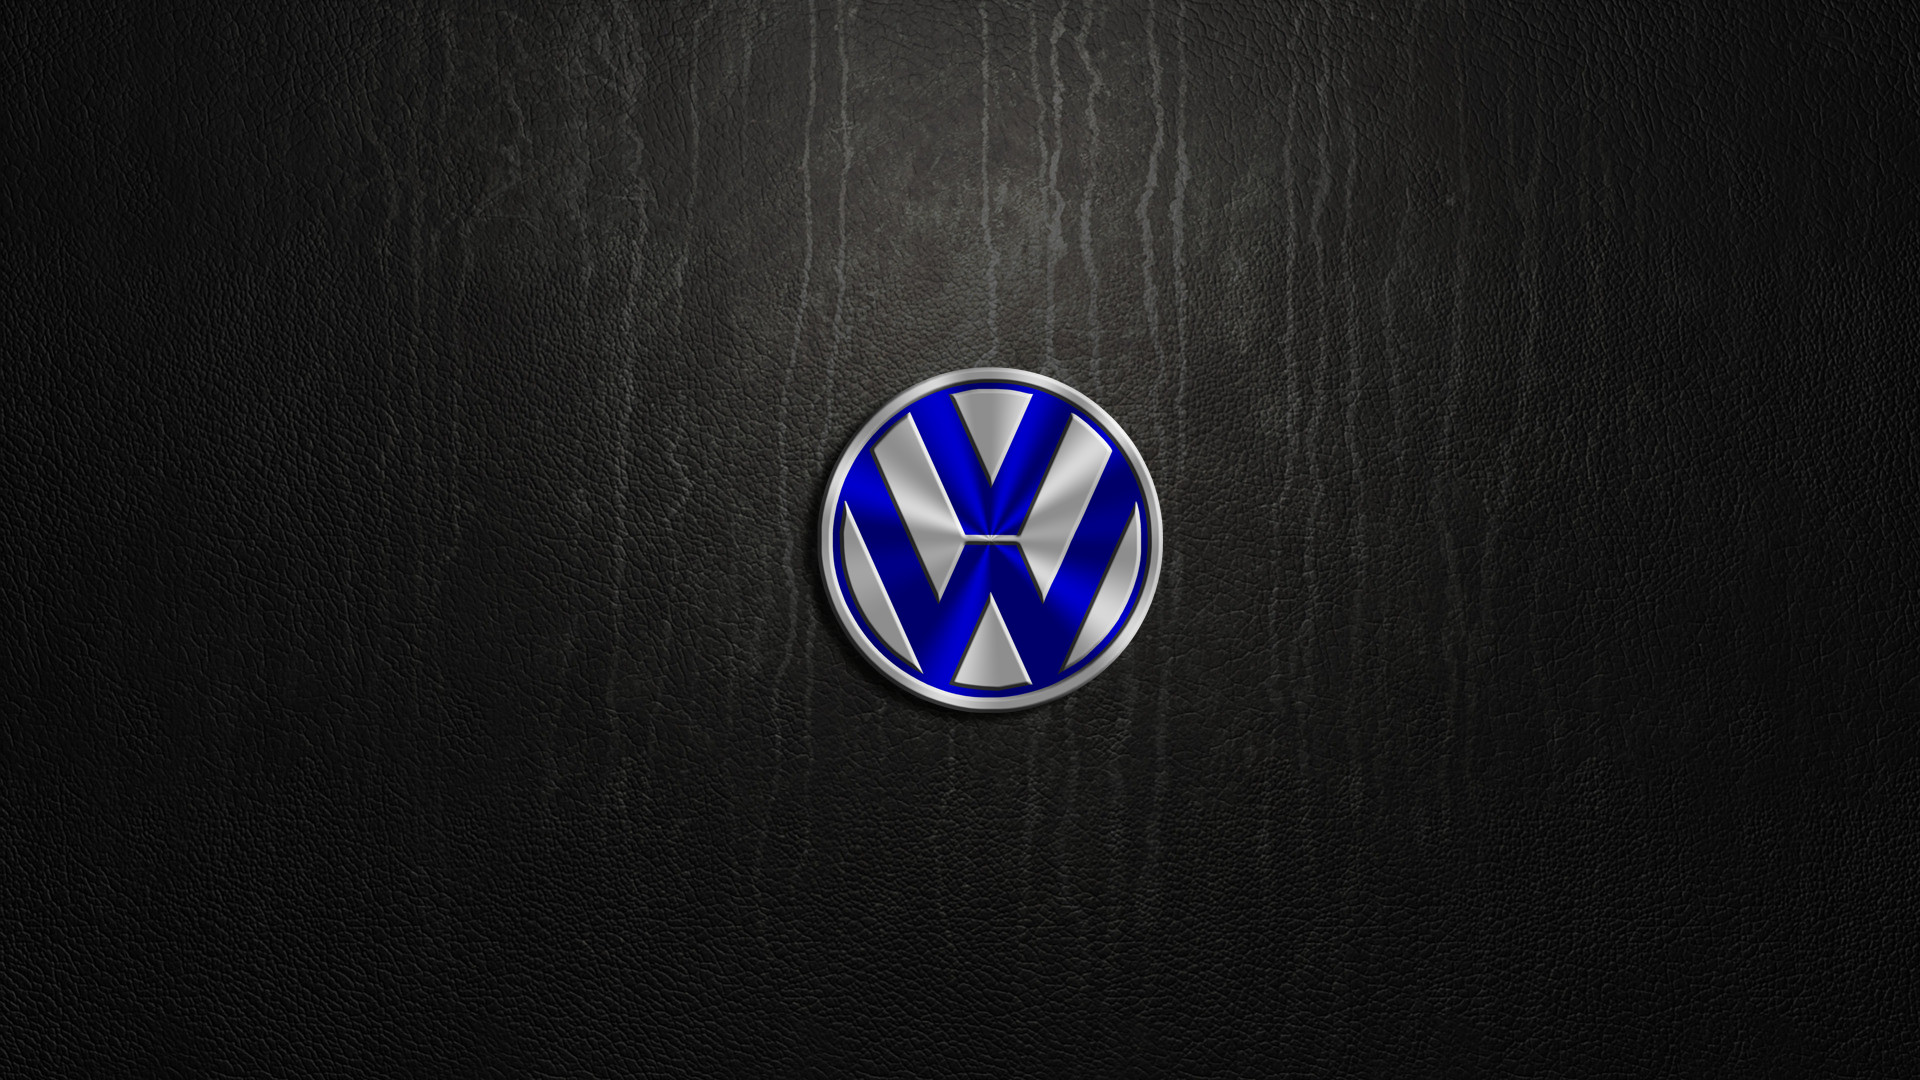 1920x1080 Volkswagen Wallpaper Picture #1Yw | Cars | Pinterest | Wallpaper pictures,  Volkswagen and Wallpaper